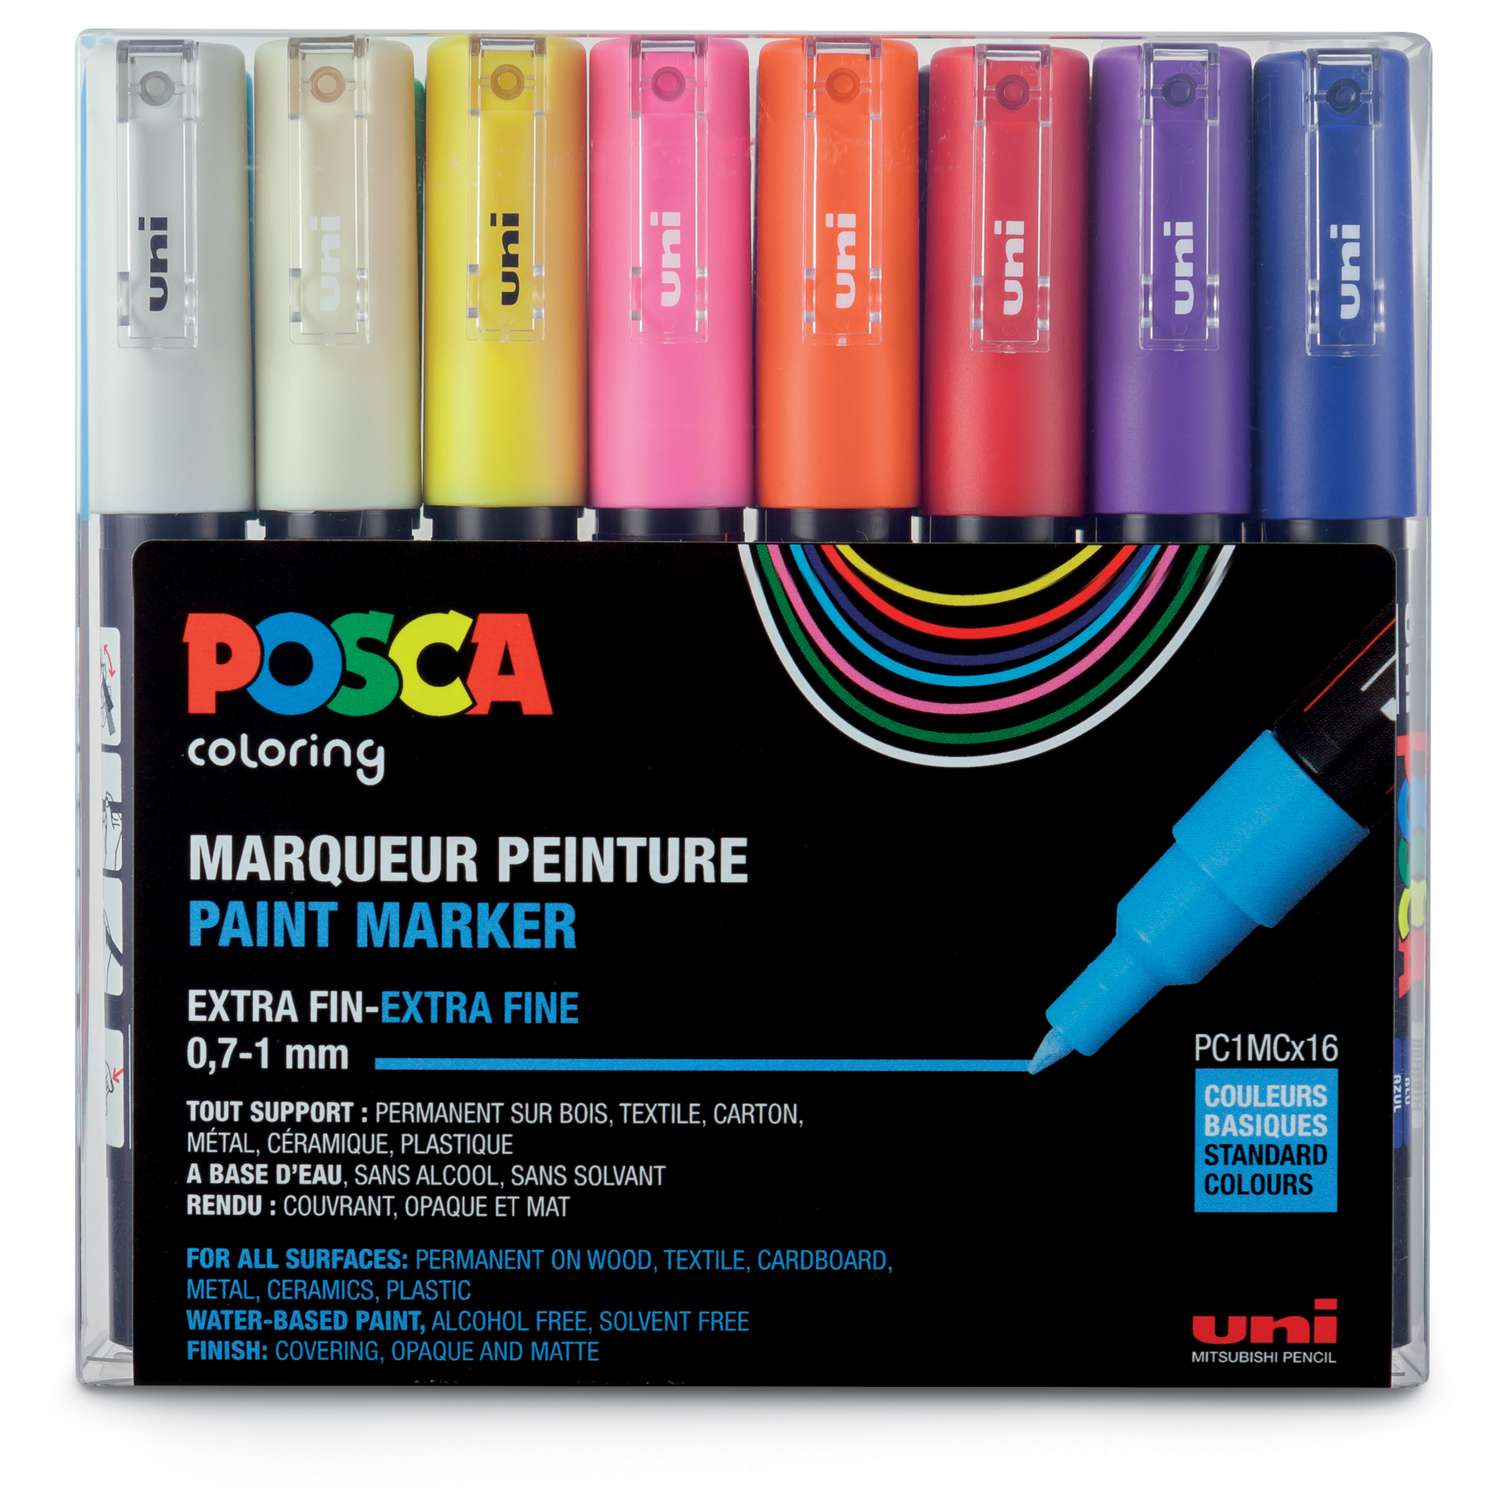 Marqueur peinture argent pointe extra fine Posca - Crayons et feutres de  coloriage Posca